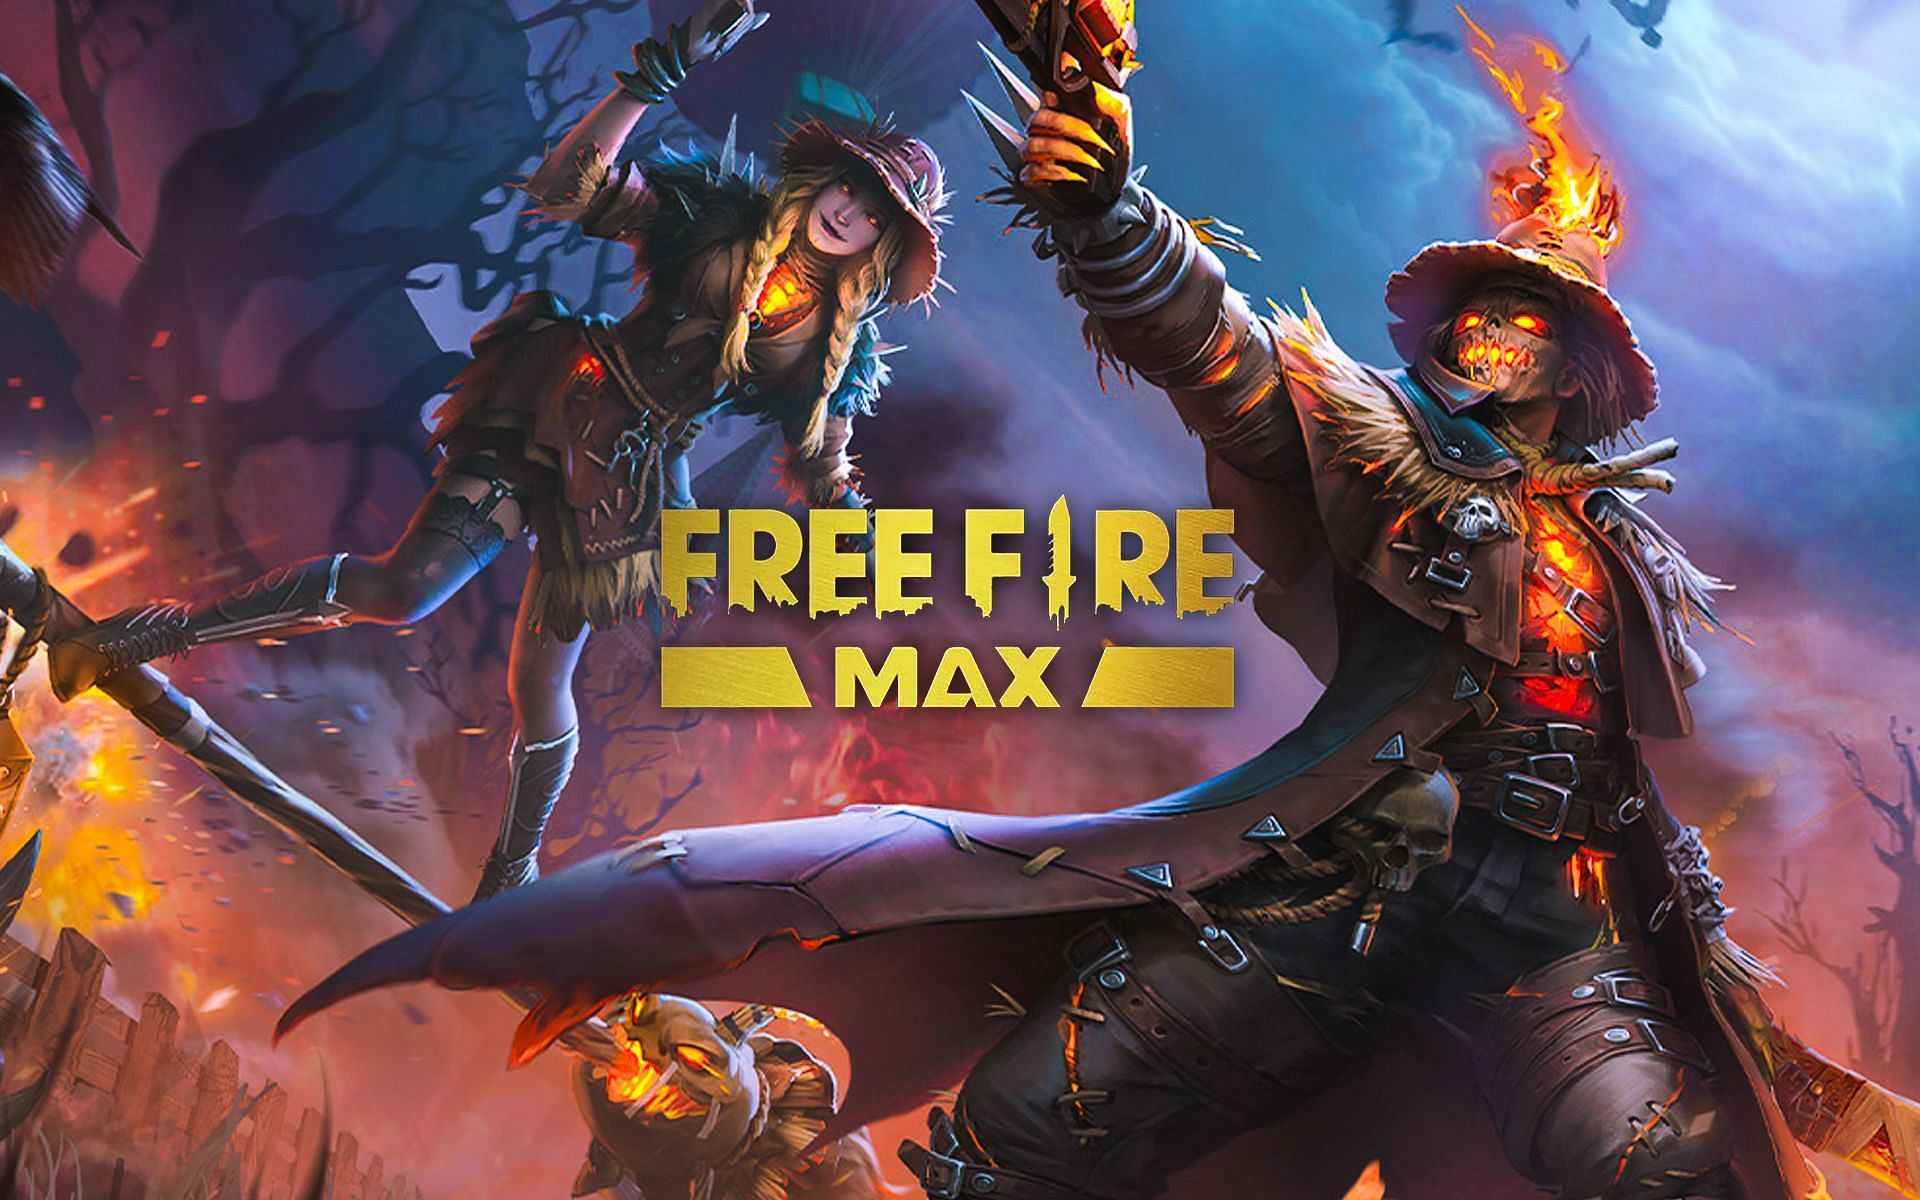 Free Fire MAX emotes released for Indian server (Image via Sportskeeda)